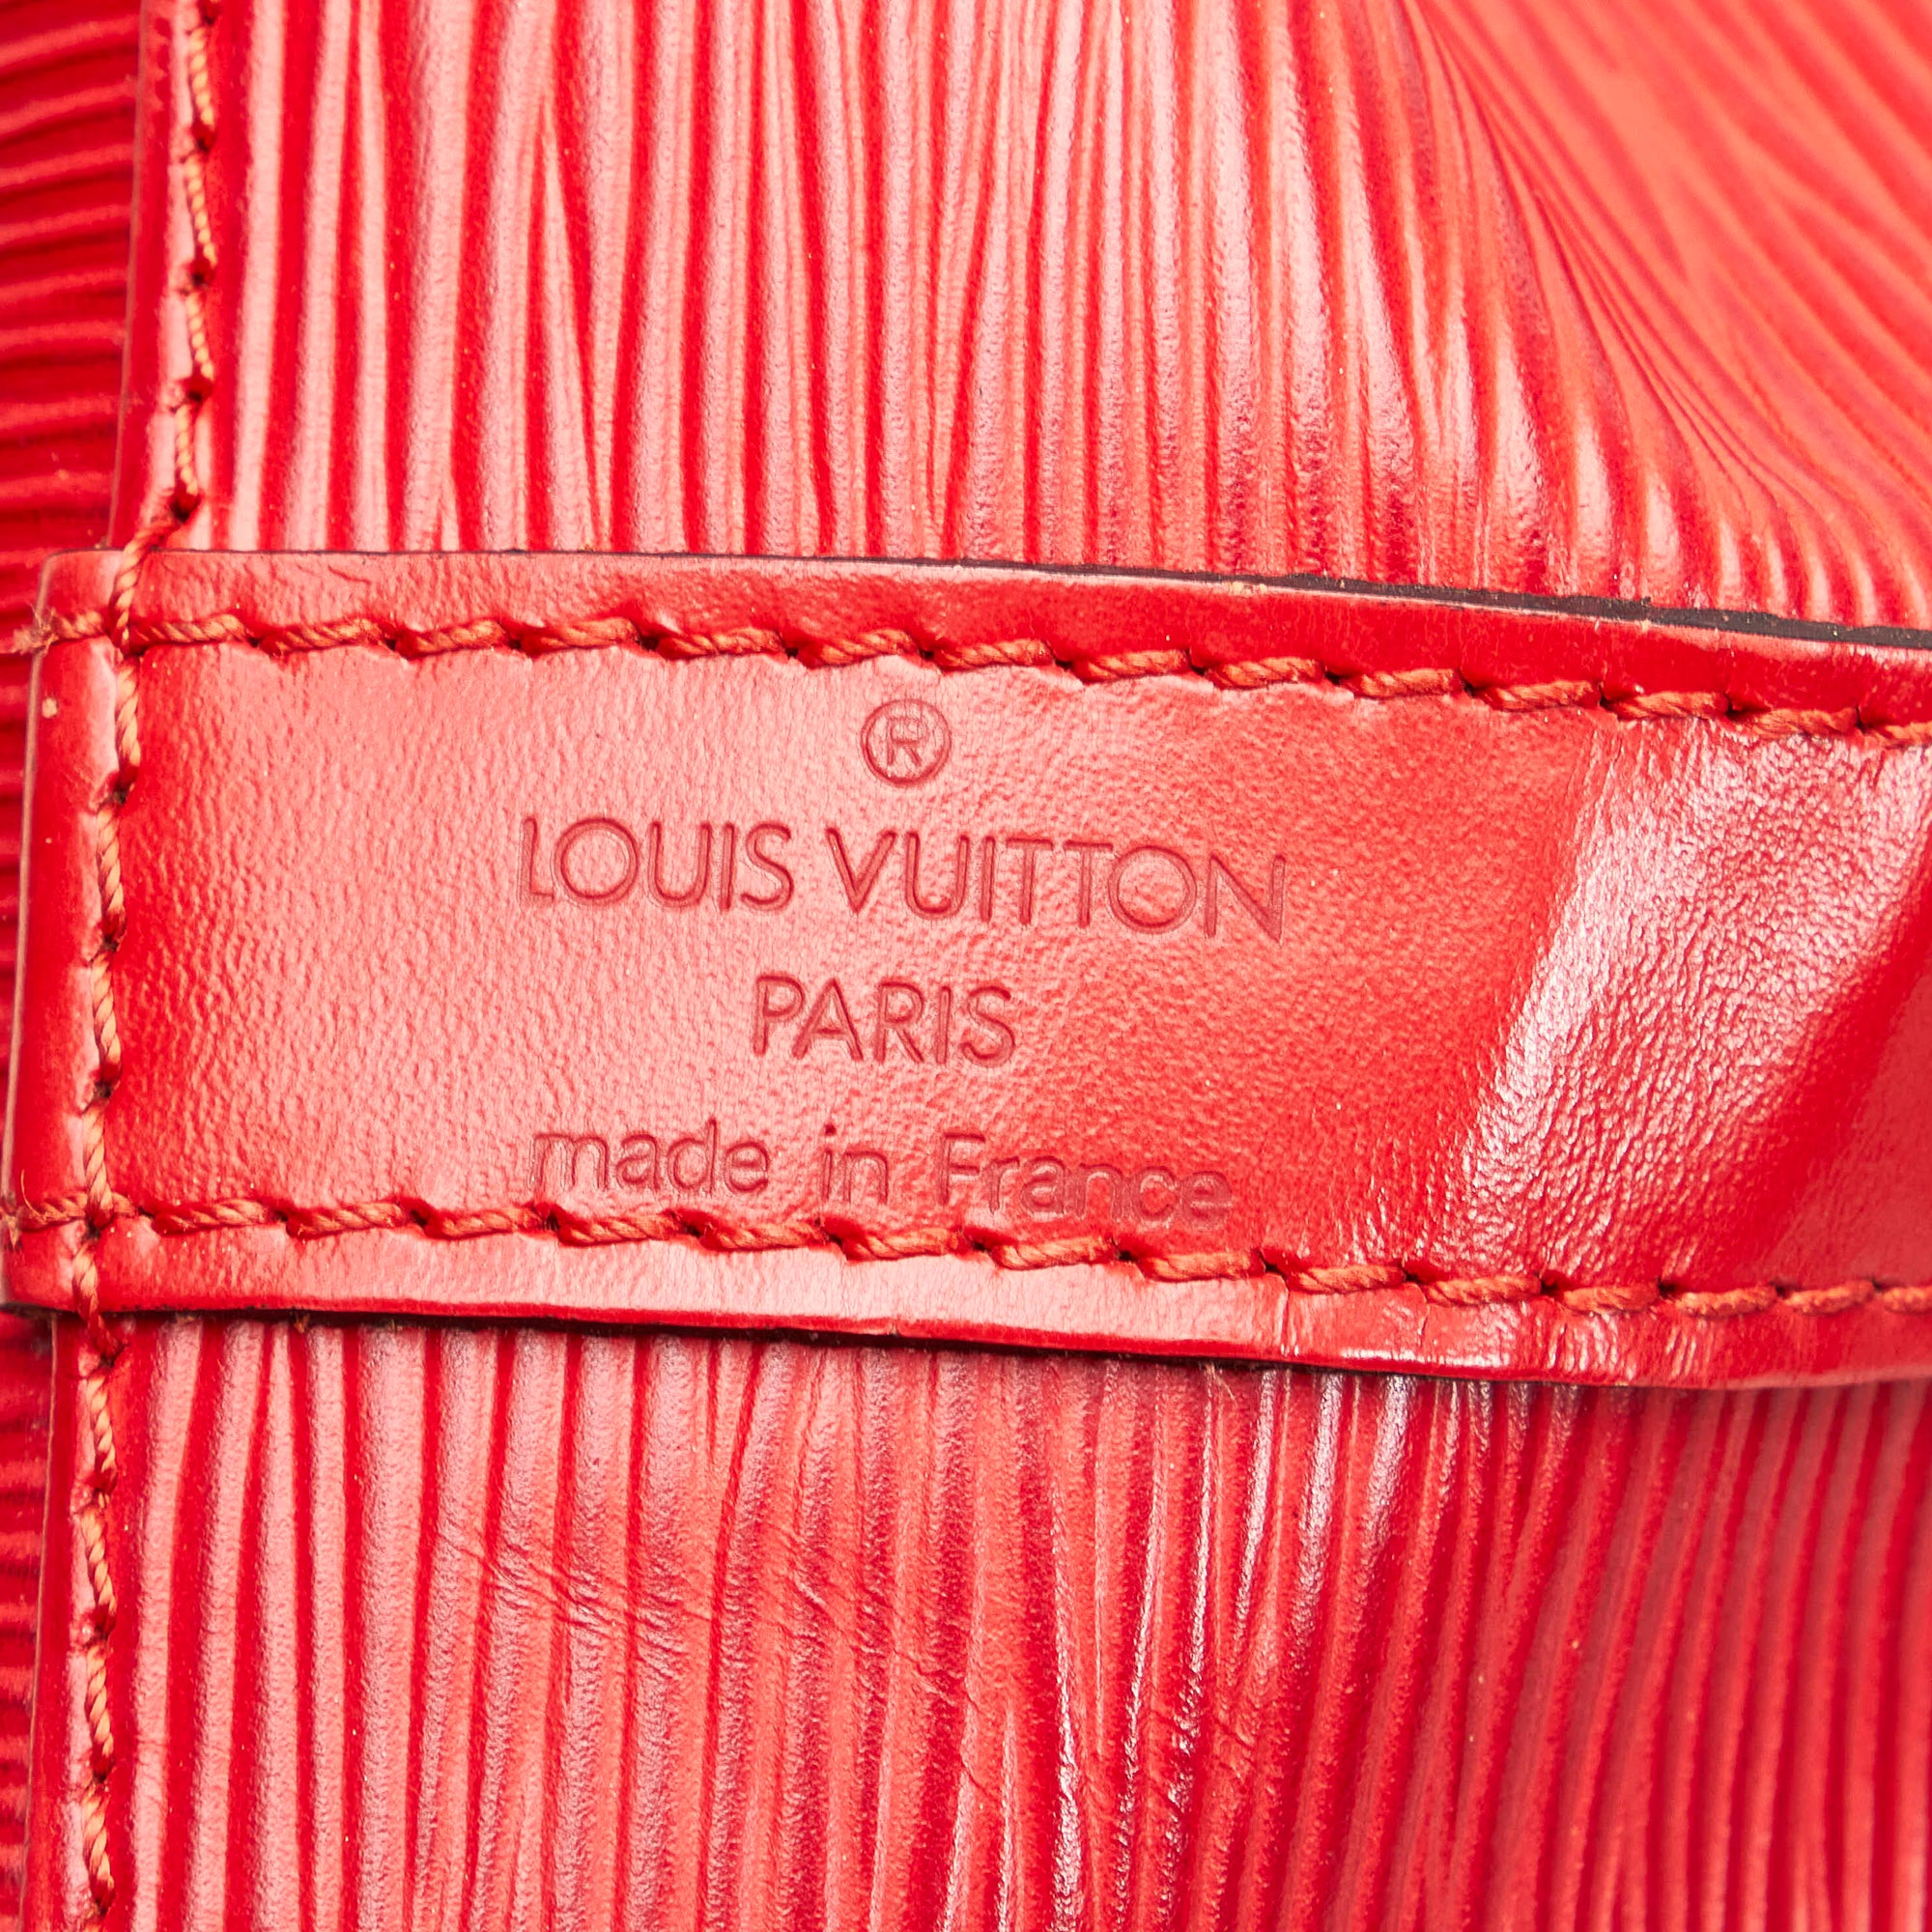 Louis Vuitton petit Noé shopping bag in pink epi leather